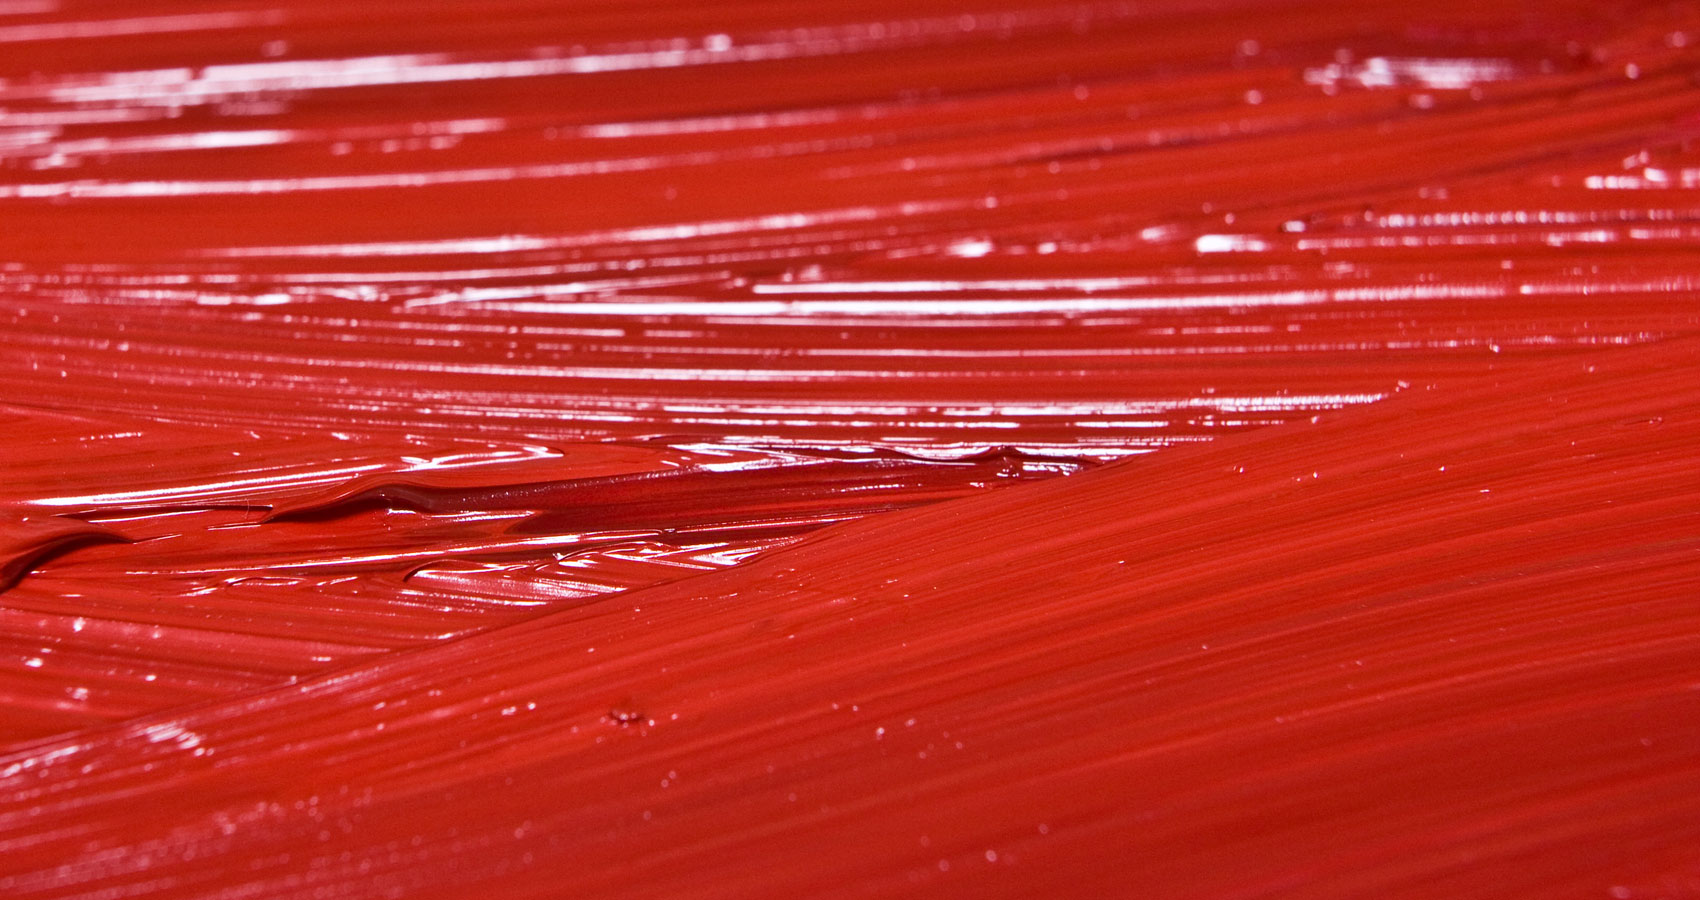 The Crimson Paint Tube by Charlie Bottle at Spillwords.com